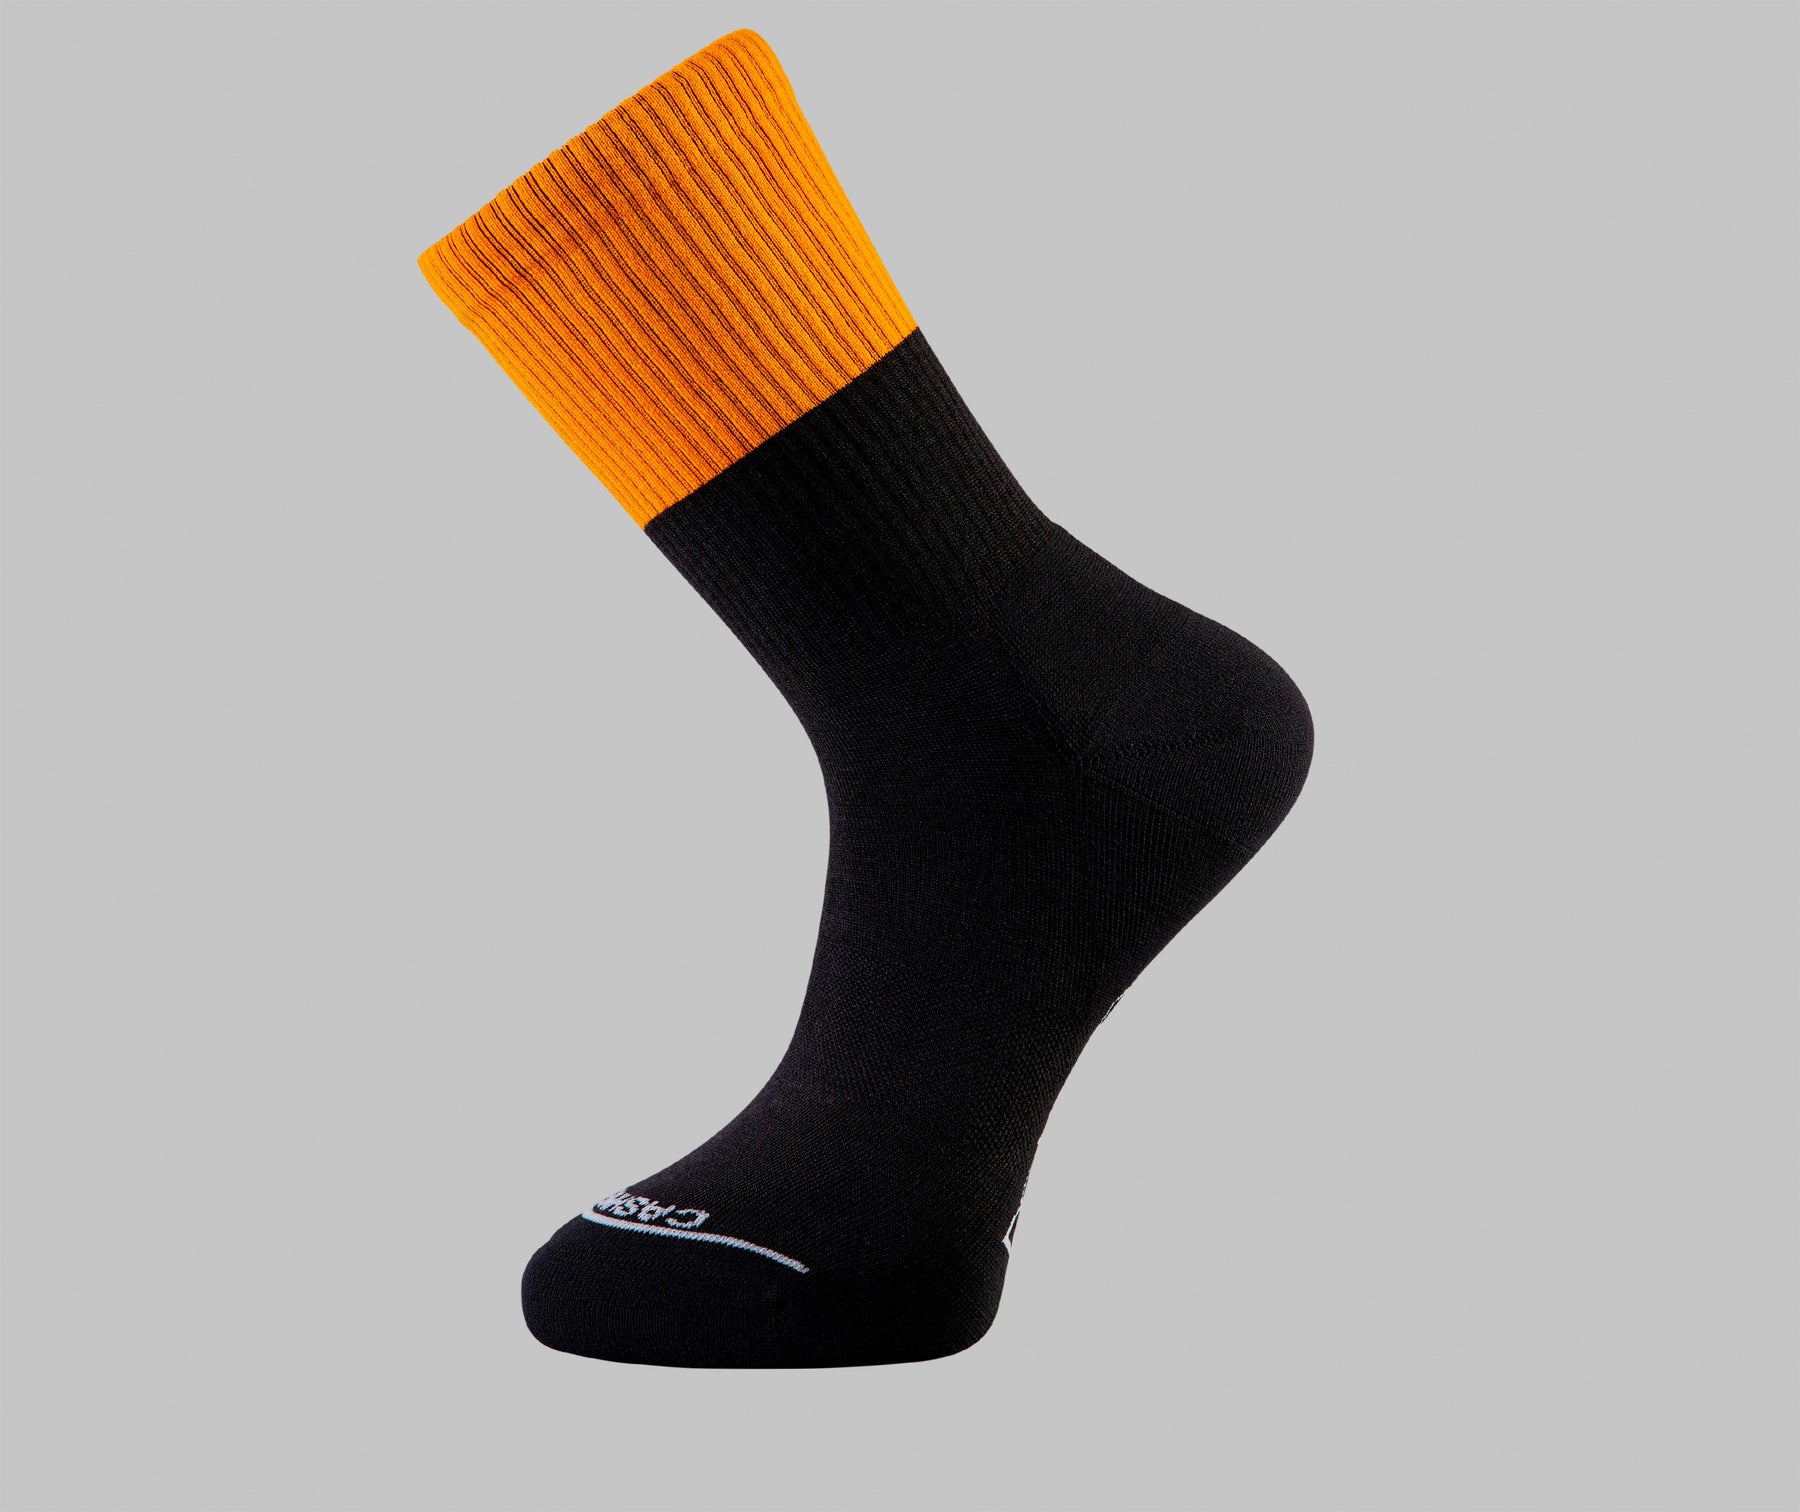 //cdn.shopify.com/s/files/1/1011/6338/products/Winter-cycling-socks-orange-cashmere-merino-pongo-london-cycling-socks_1800x.jpg)